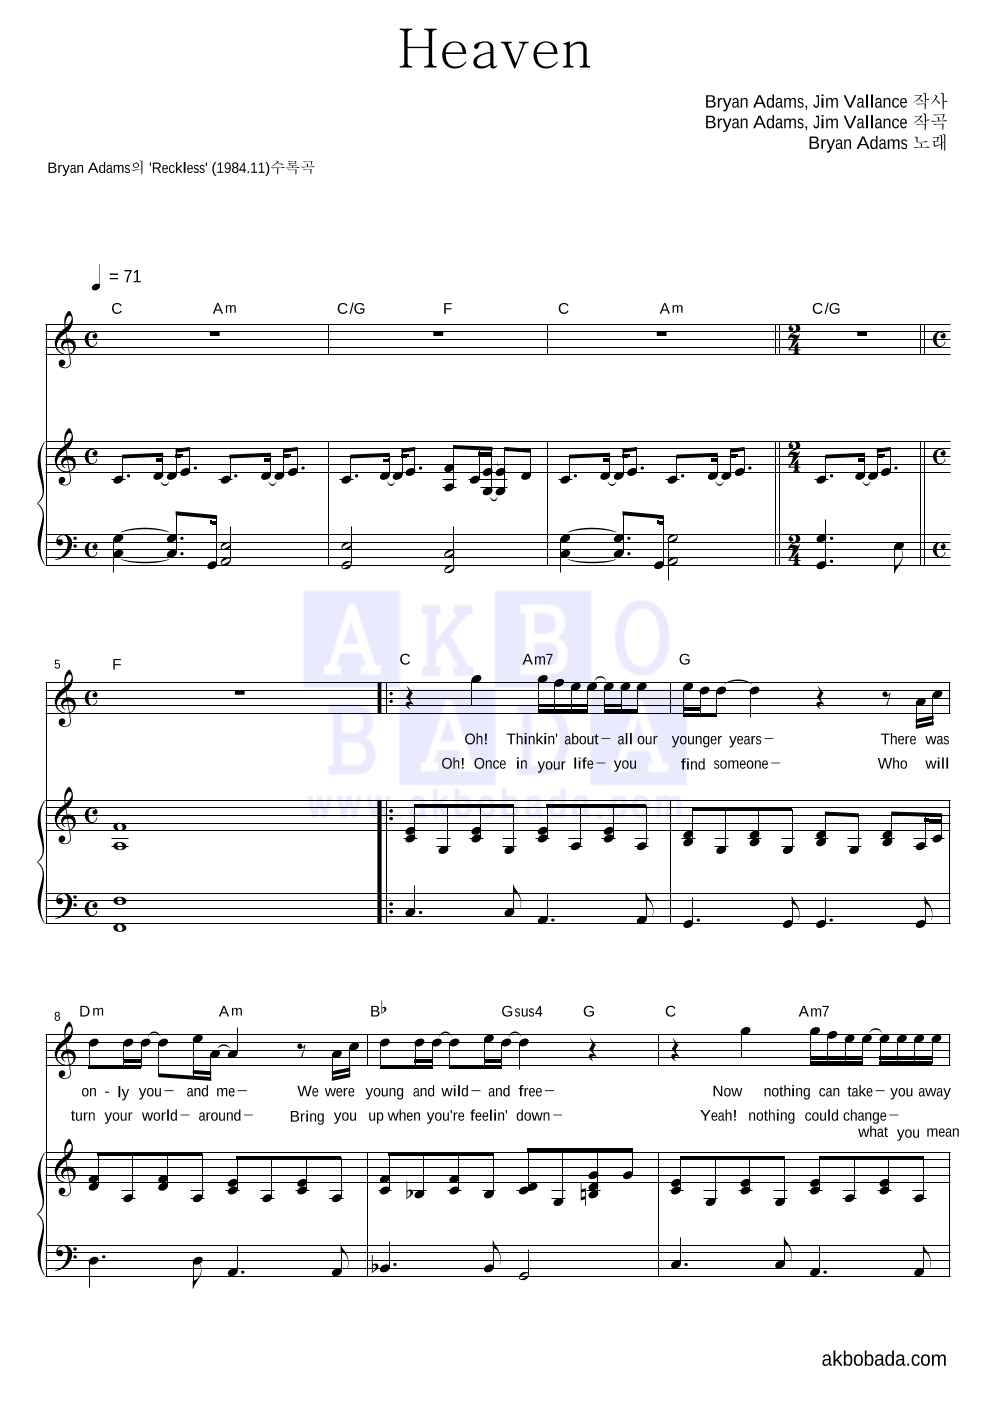 Bryan Adams - Heaven 피아노 3단 악보 